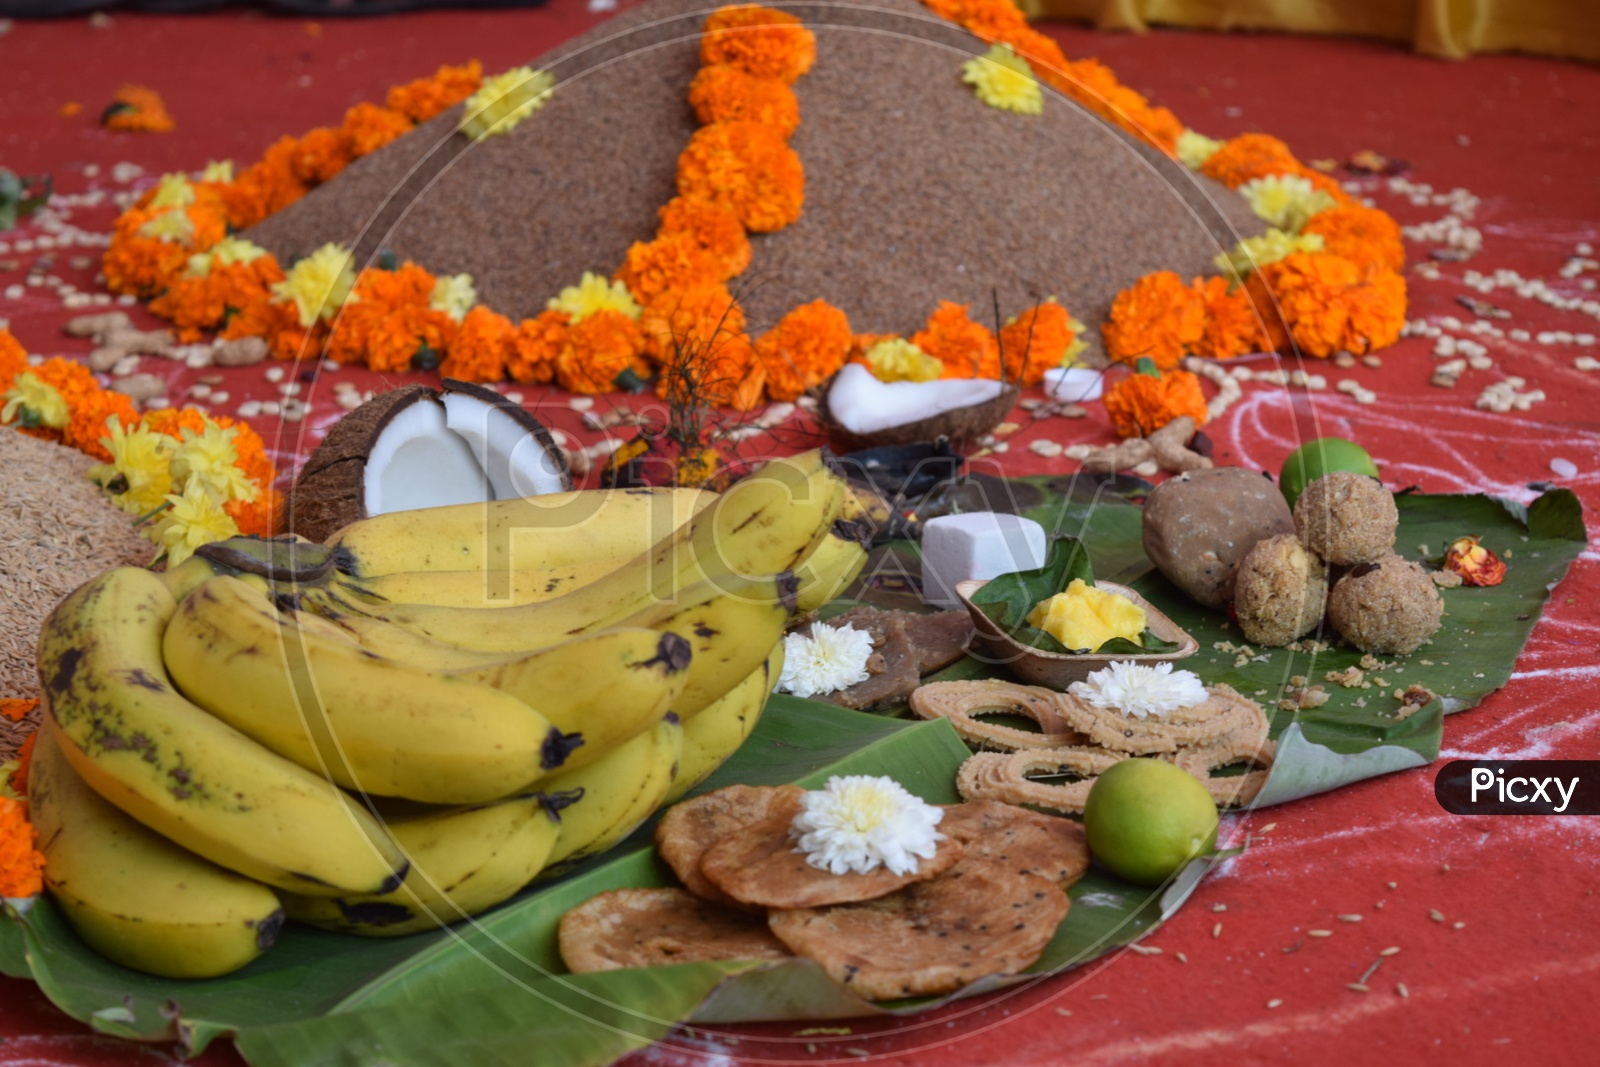 Sankranti festival